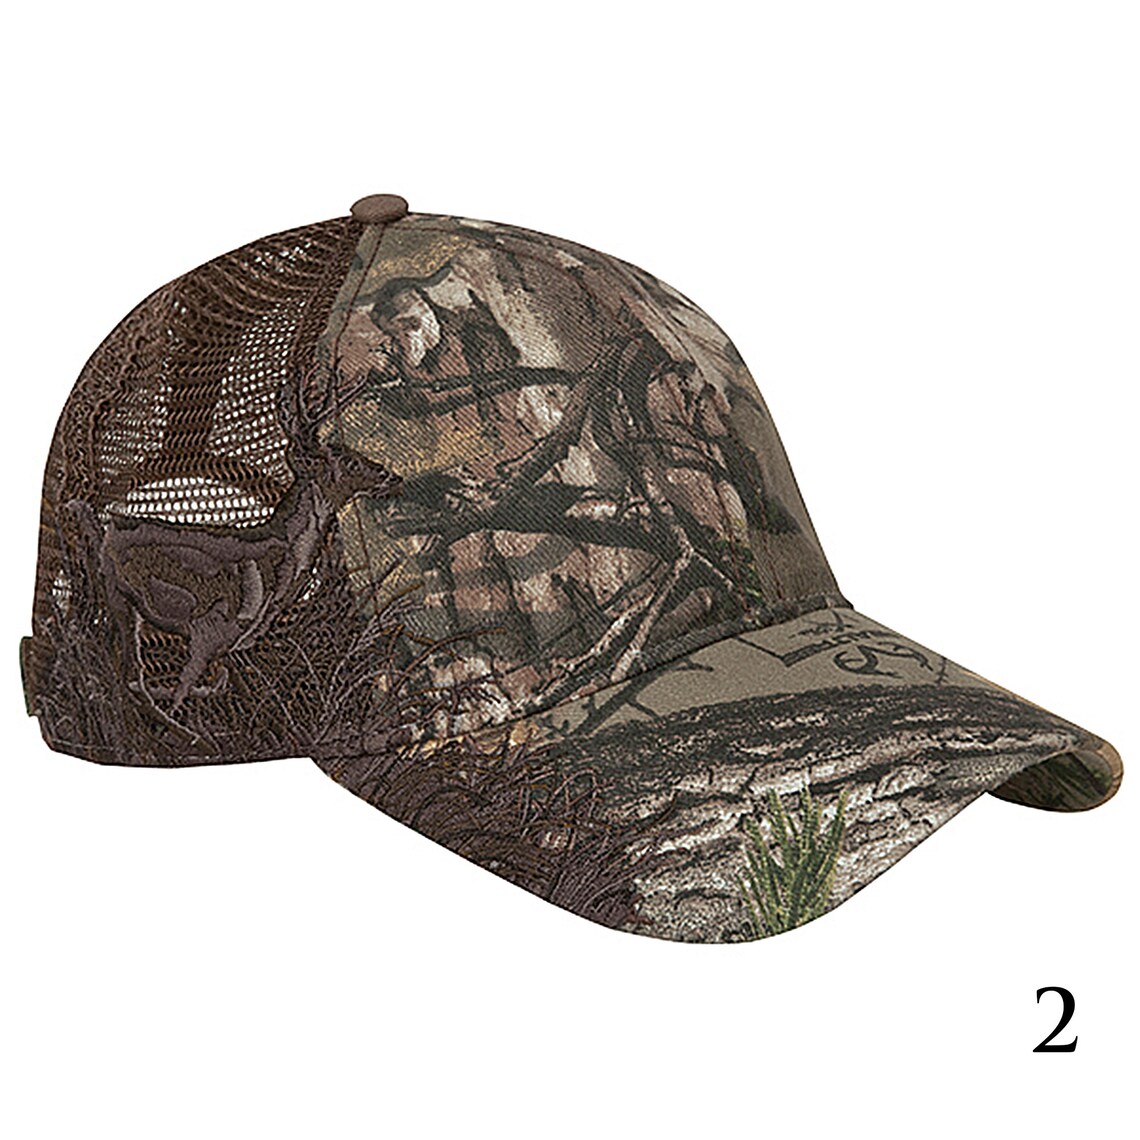 Buck Hat hunting hat deer buck outdoor enthusiast | Etsy